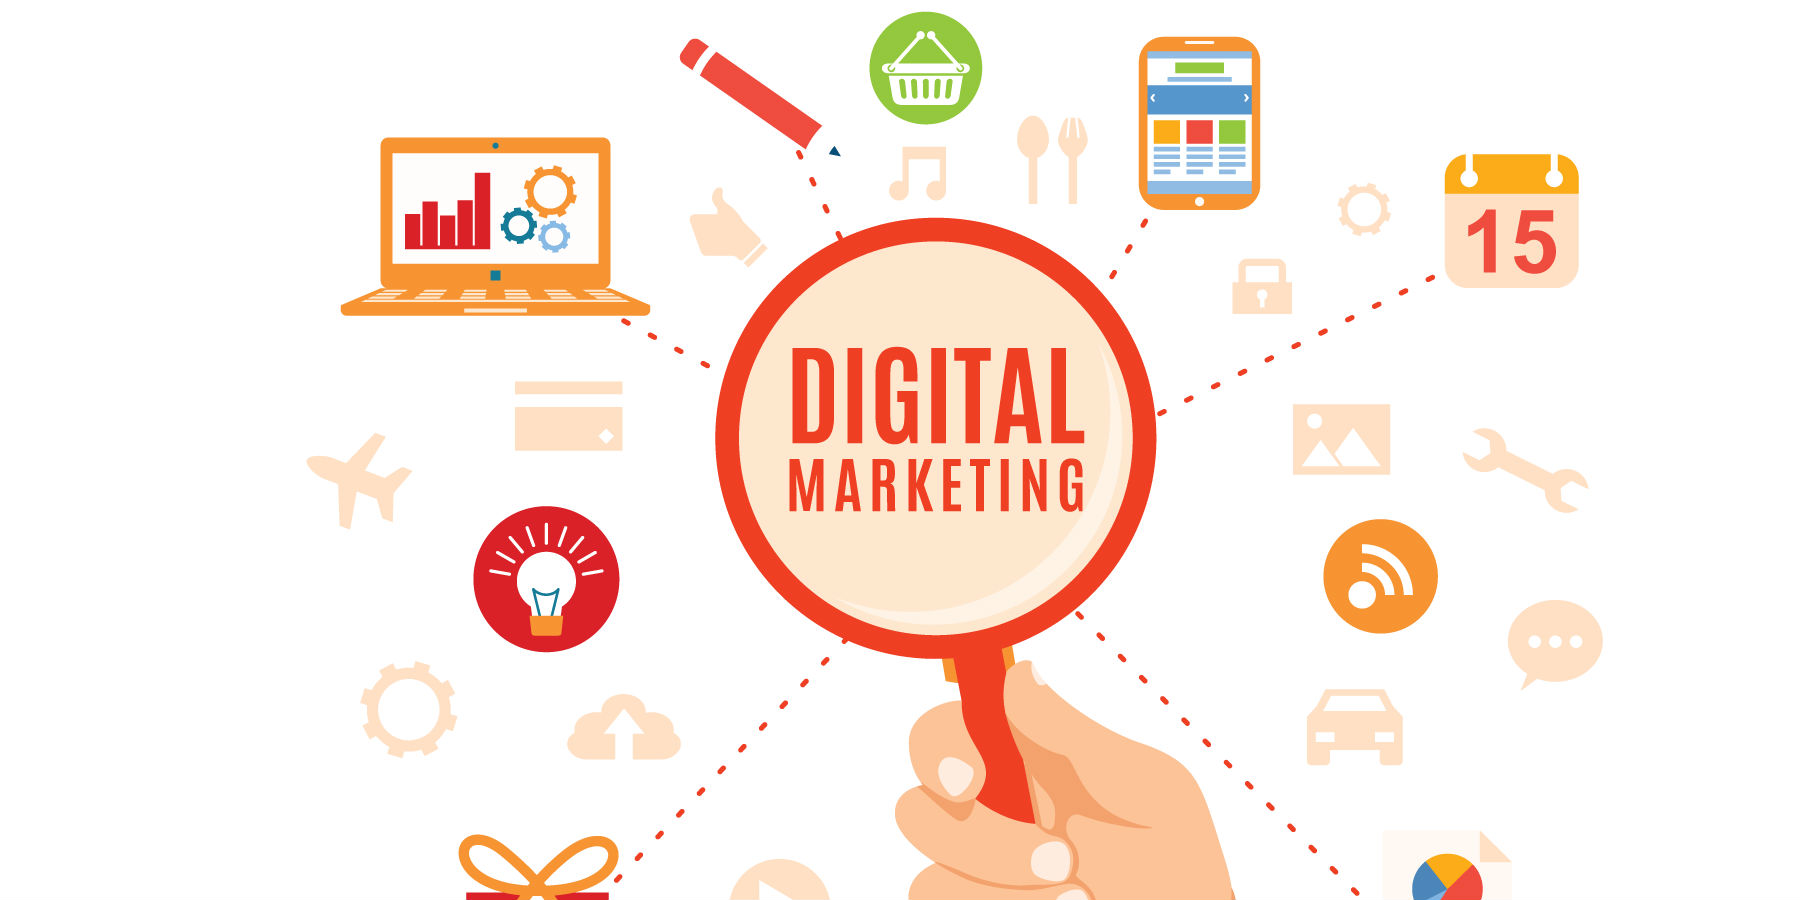 Digital Marketing – A New Era of Marketing